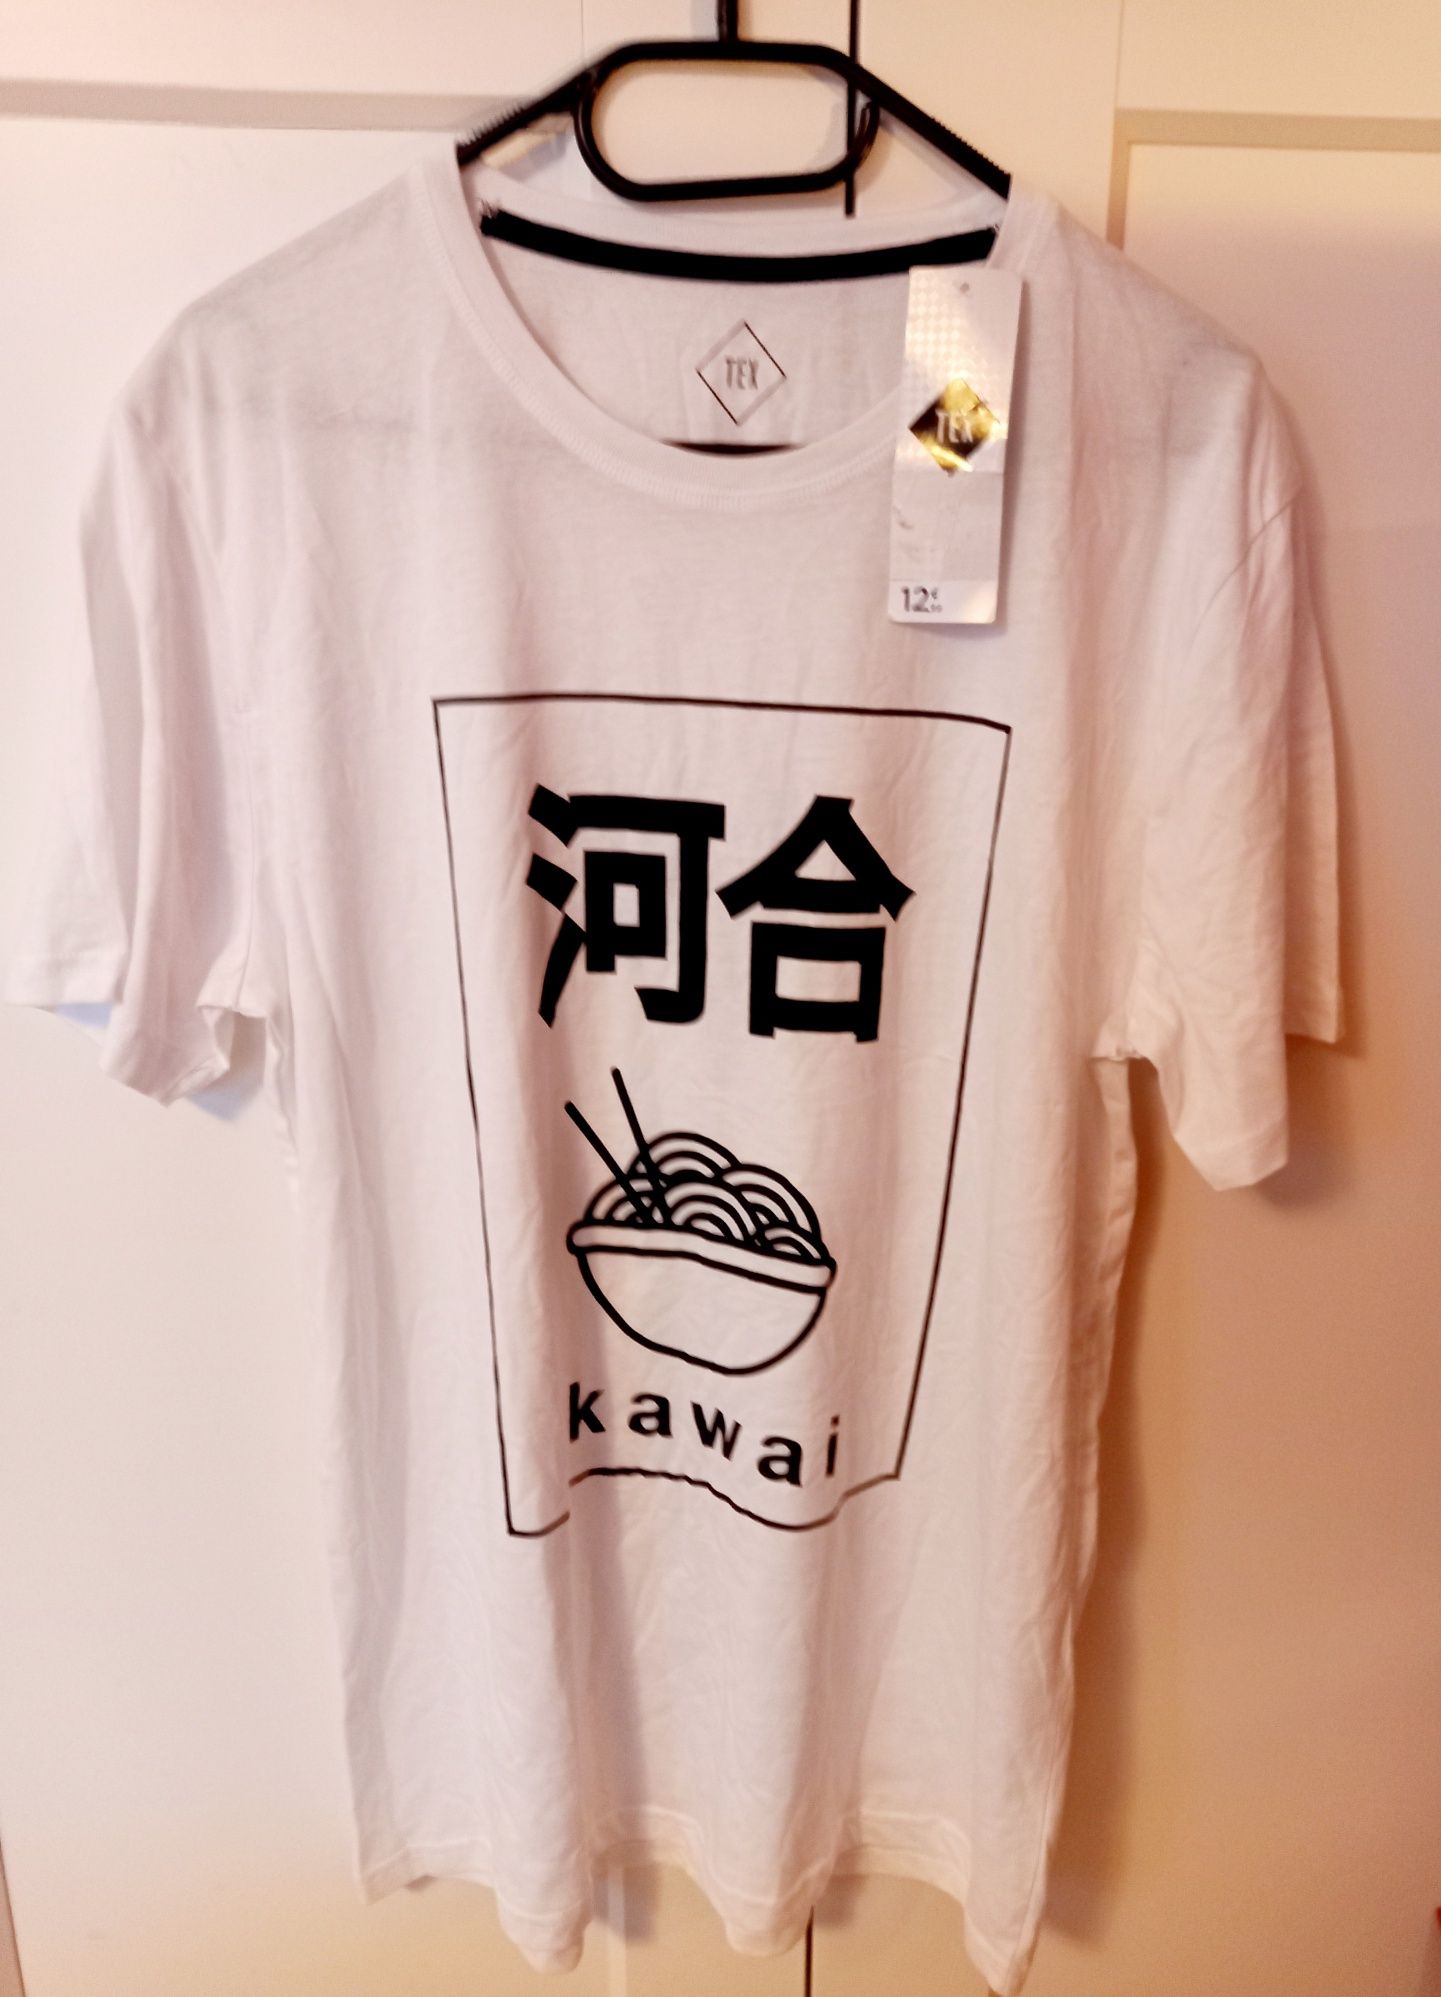 Kawai - biały T-shirt bawełniany,  rozmiar L